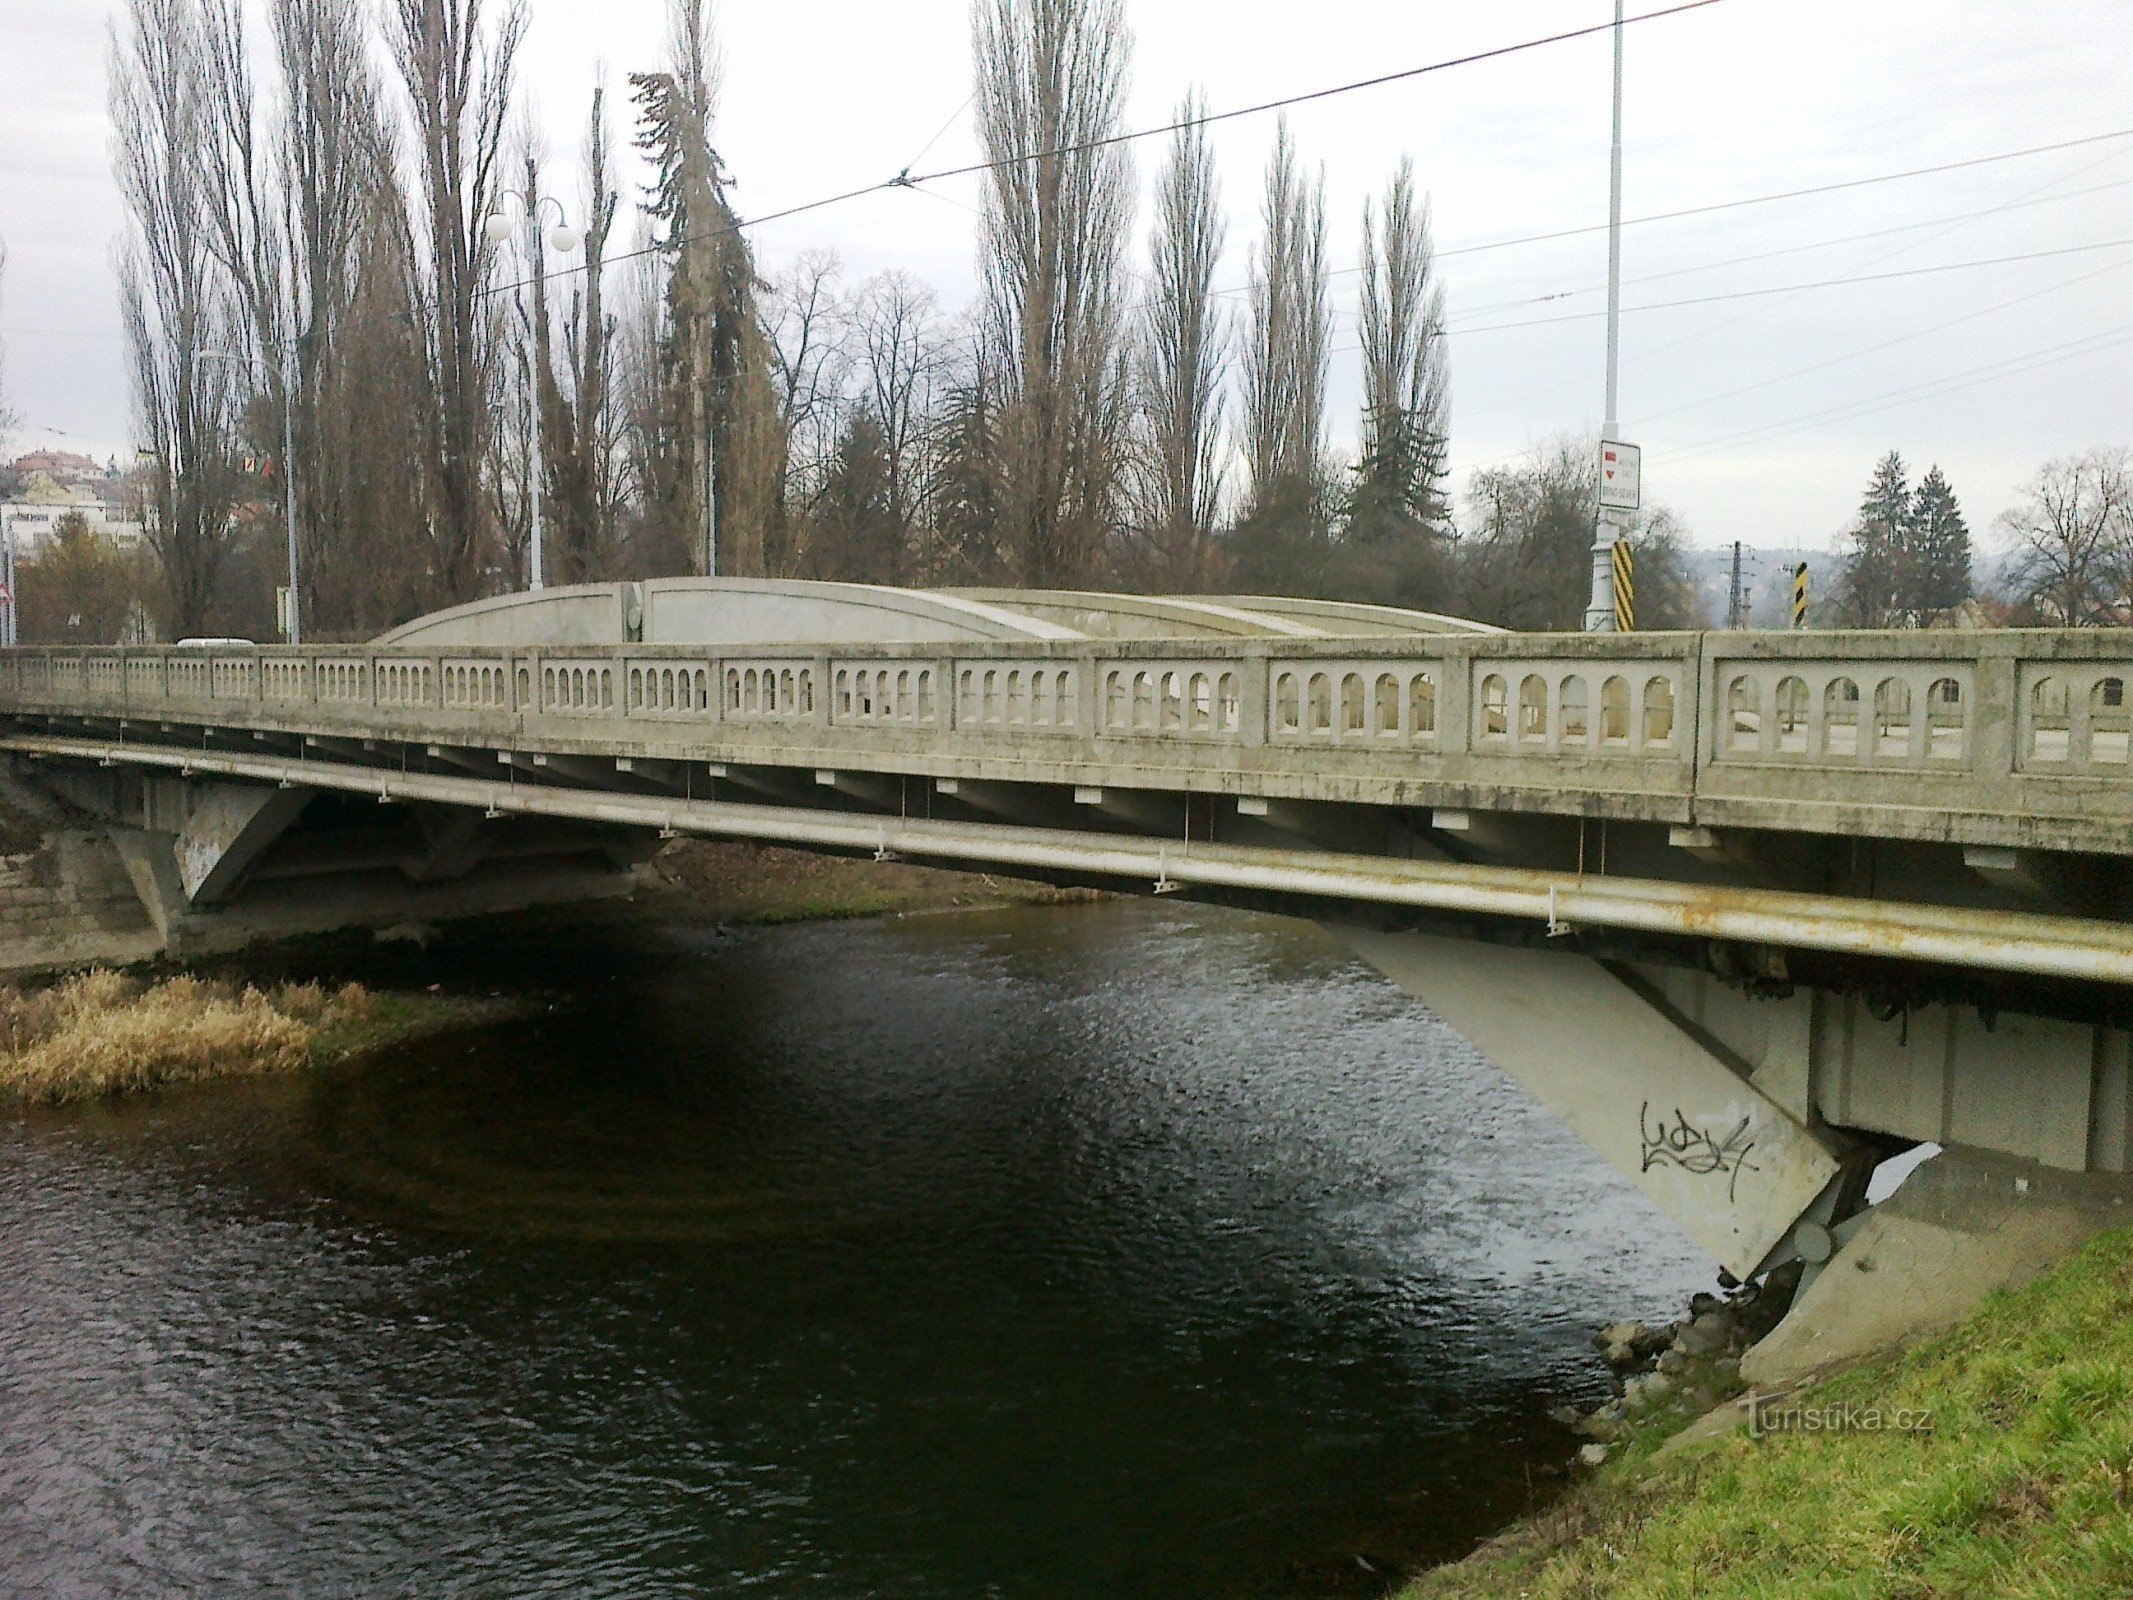 Maloměřice bridge